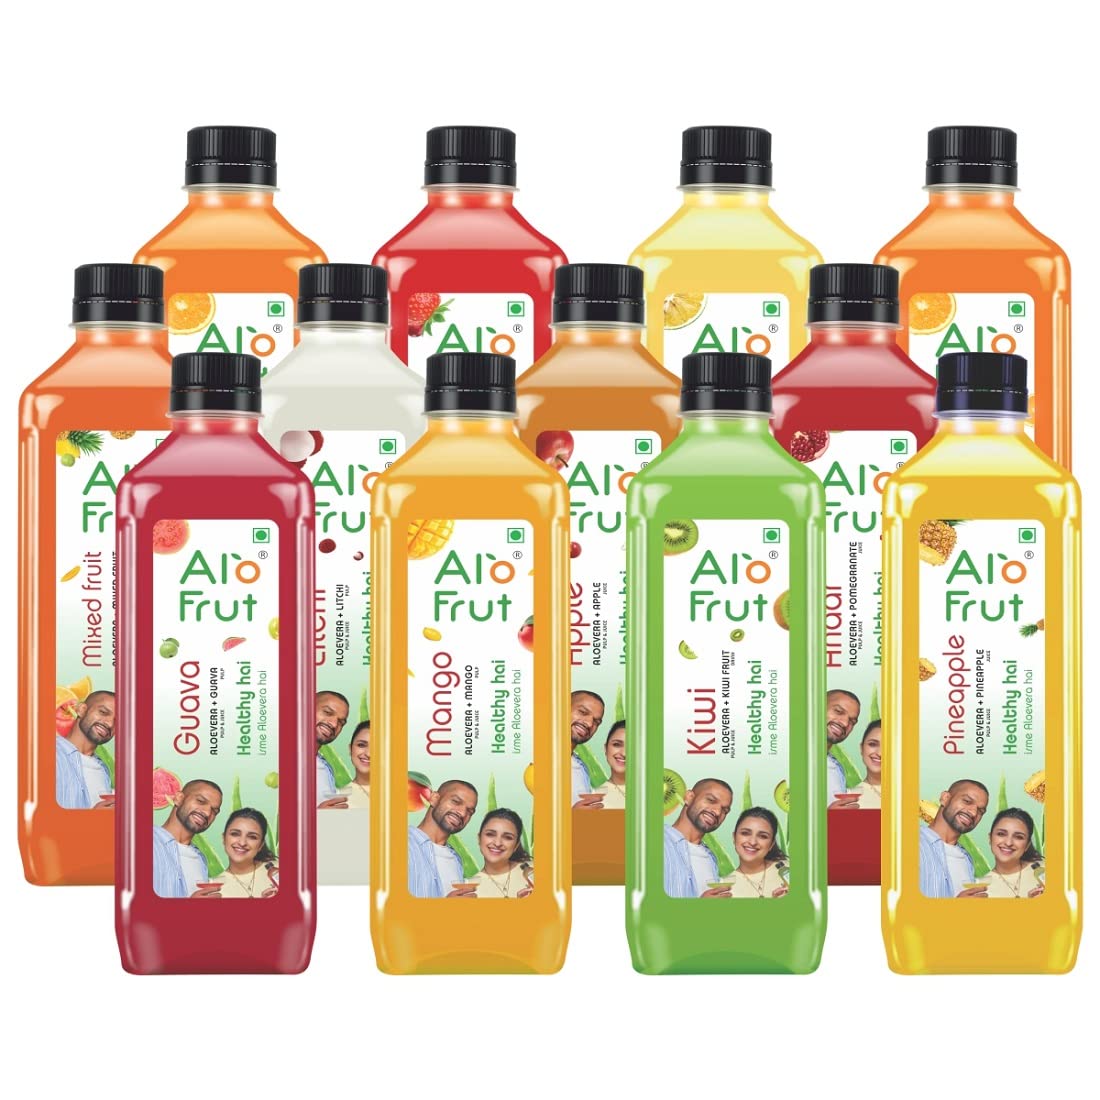 Alo Frut Juice 300 ml - Pack of 8 | Fruit Juice and Aloevera Pulp | 2 ea of Anaar, Mixfruit, Mosambi, Pineapple